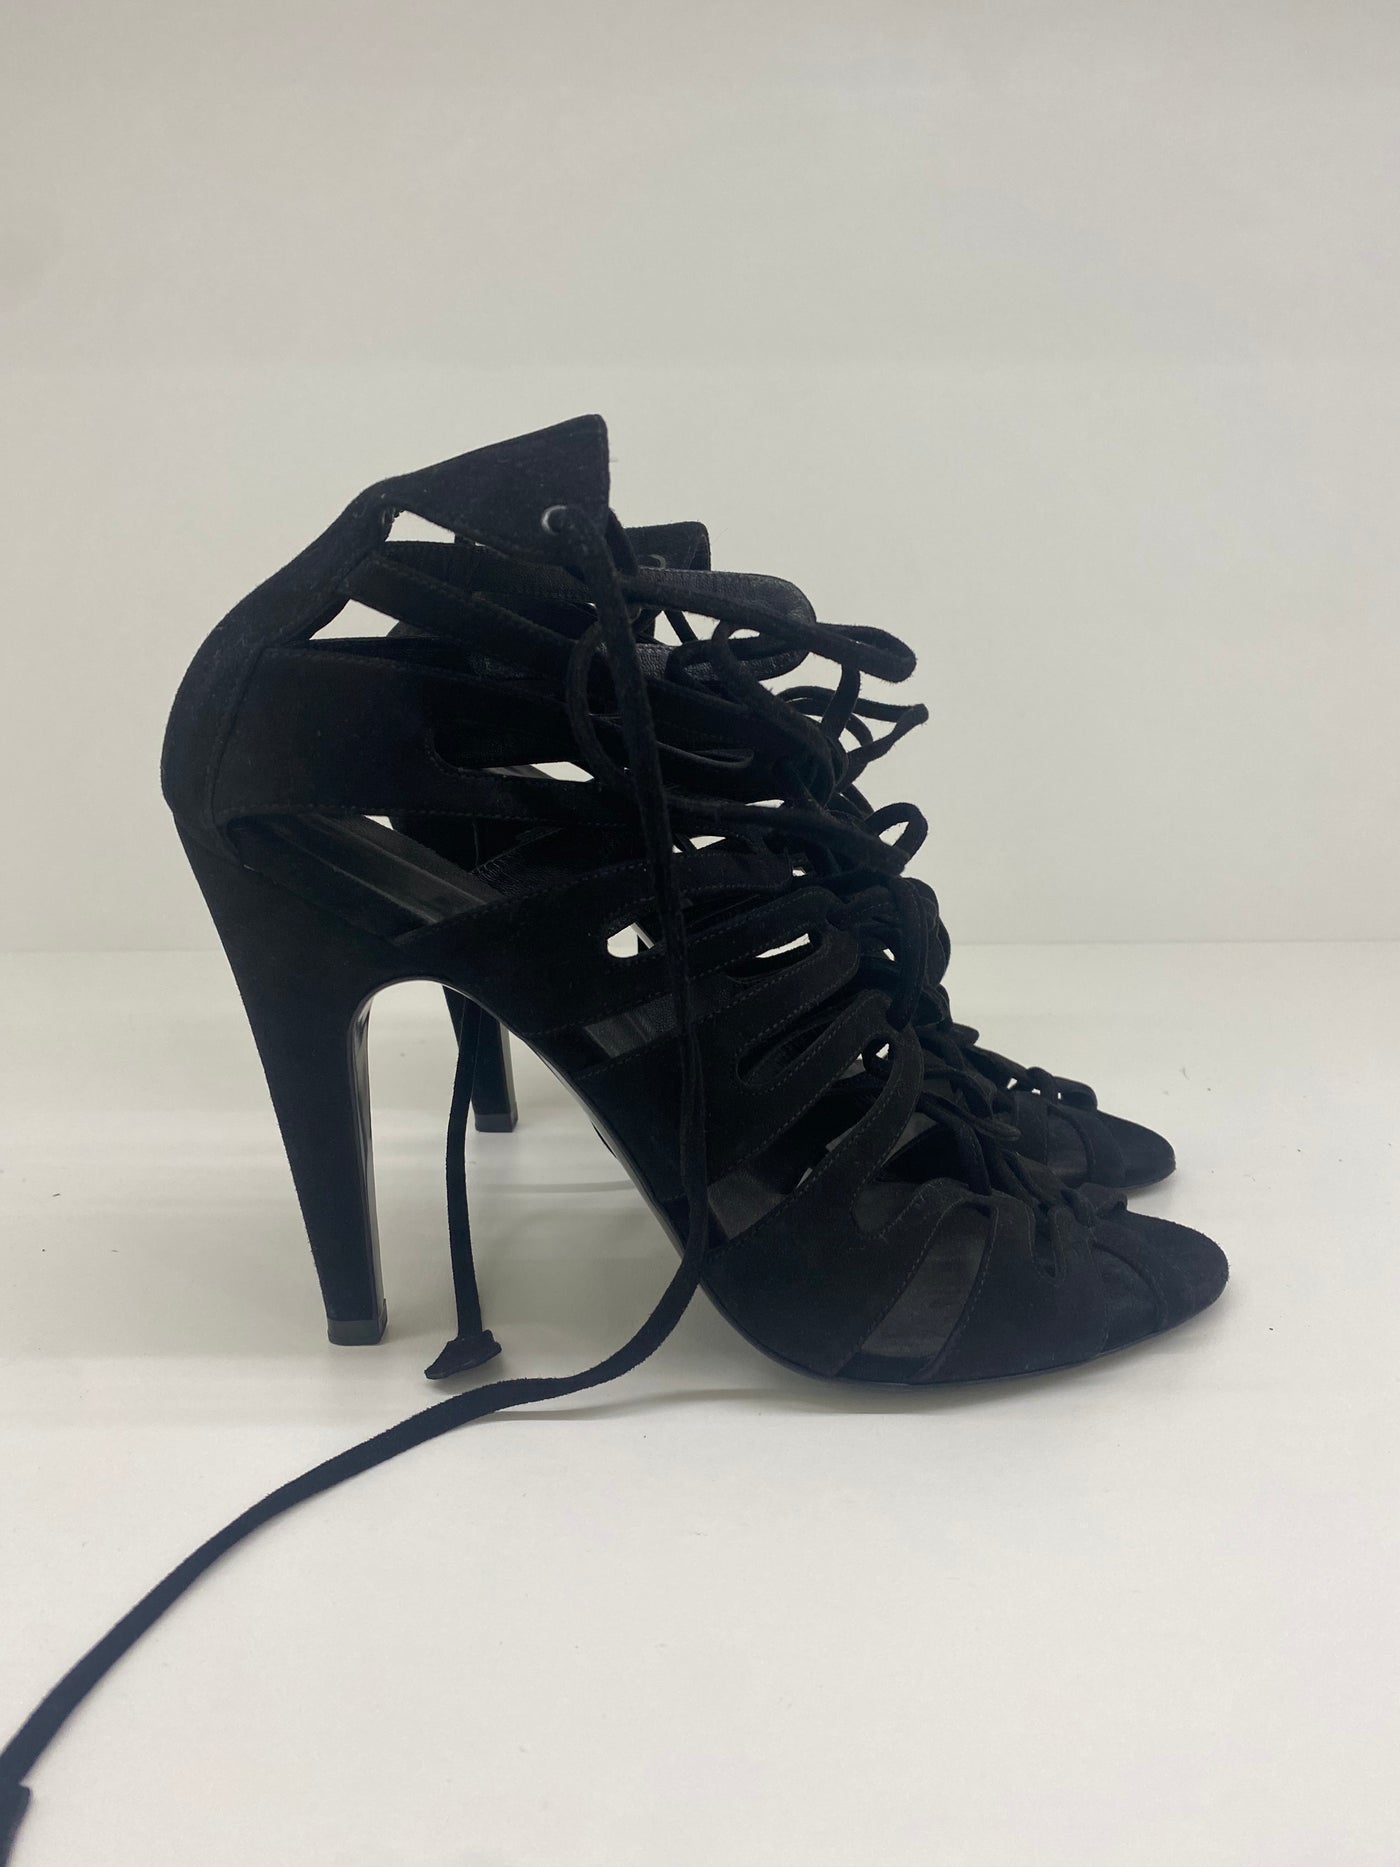 Hermes Black Lace Up Heels - Size 41